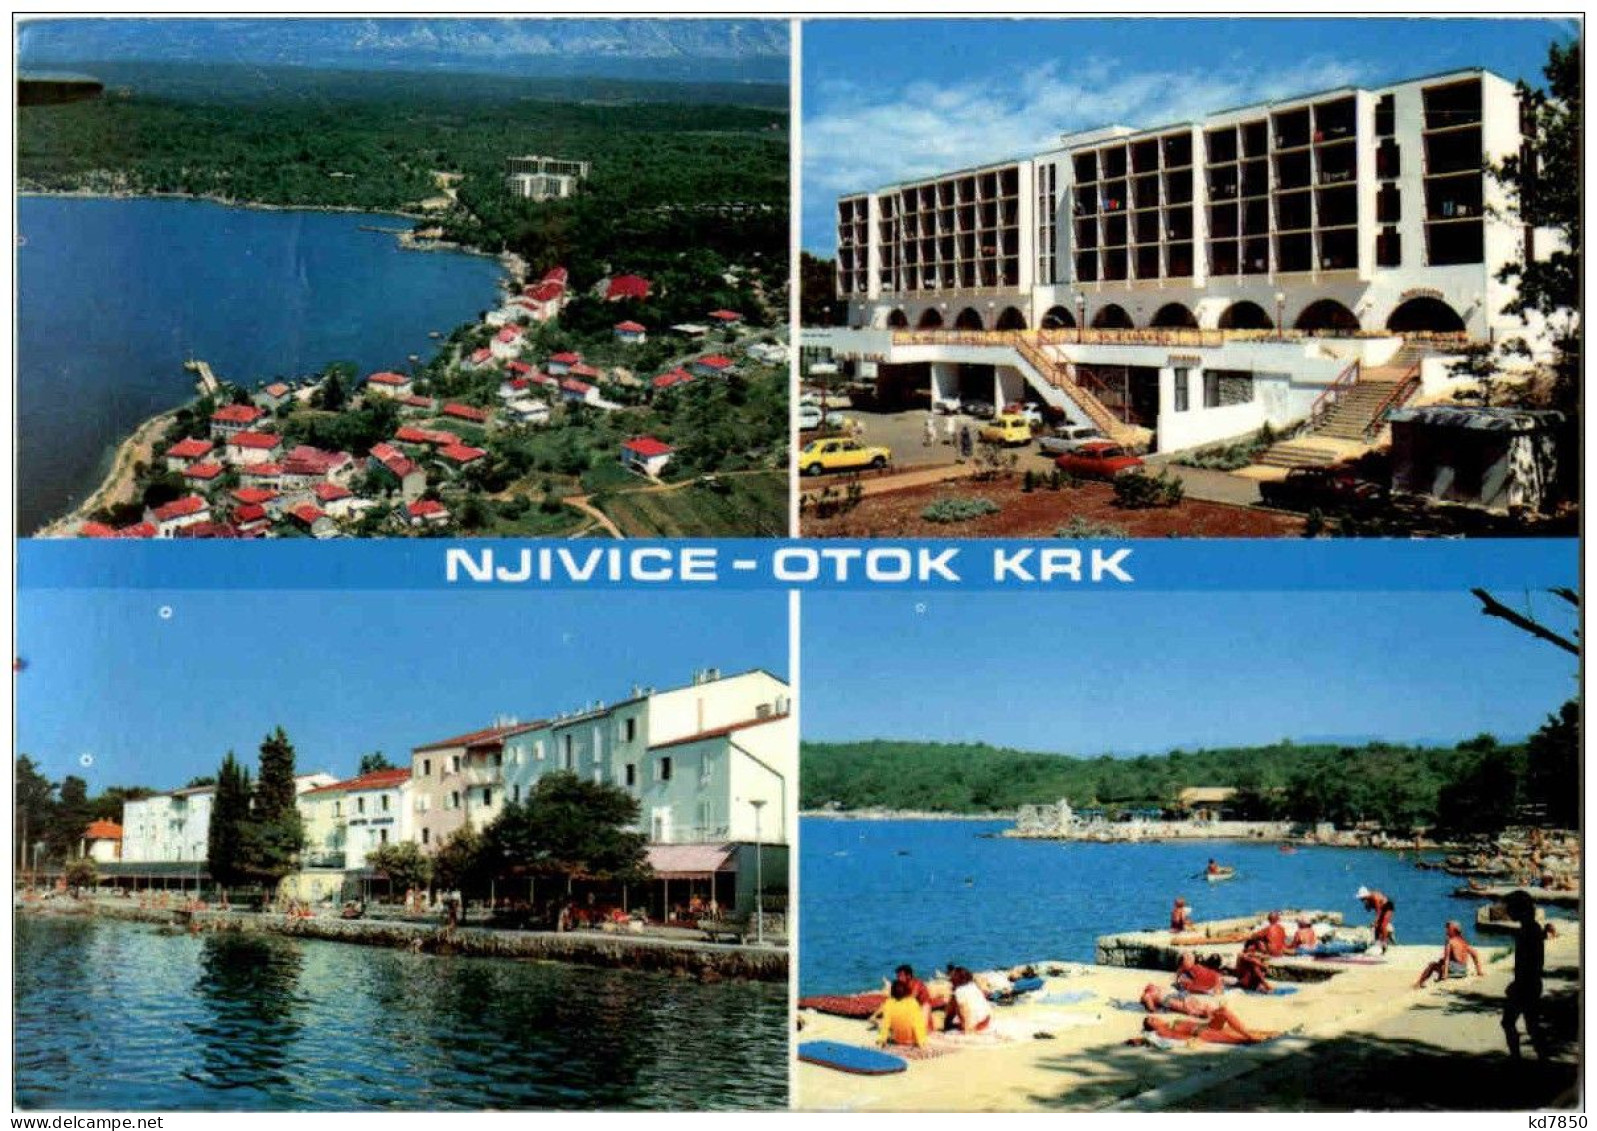 Njivice - Otok Krk - Croacia